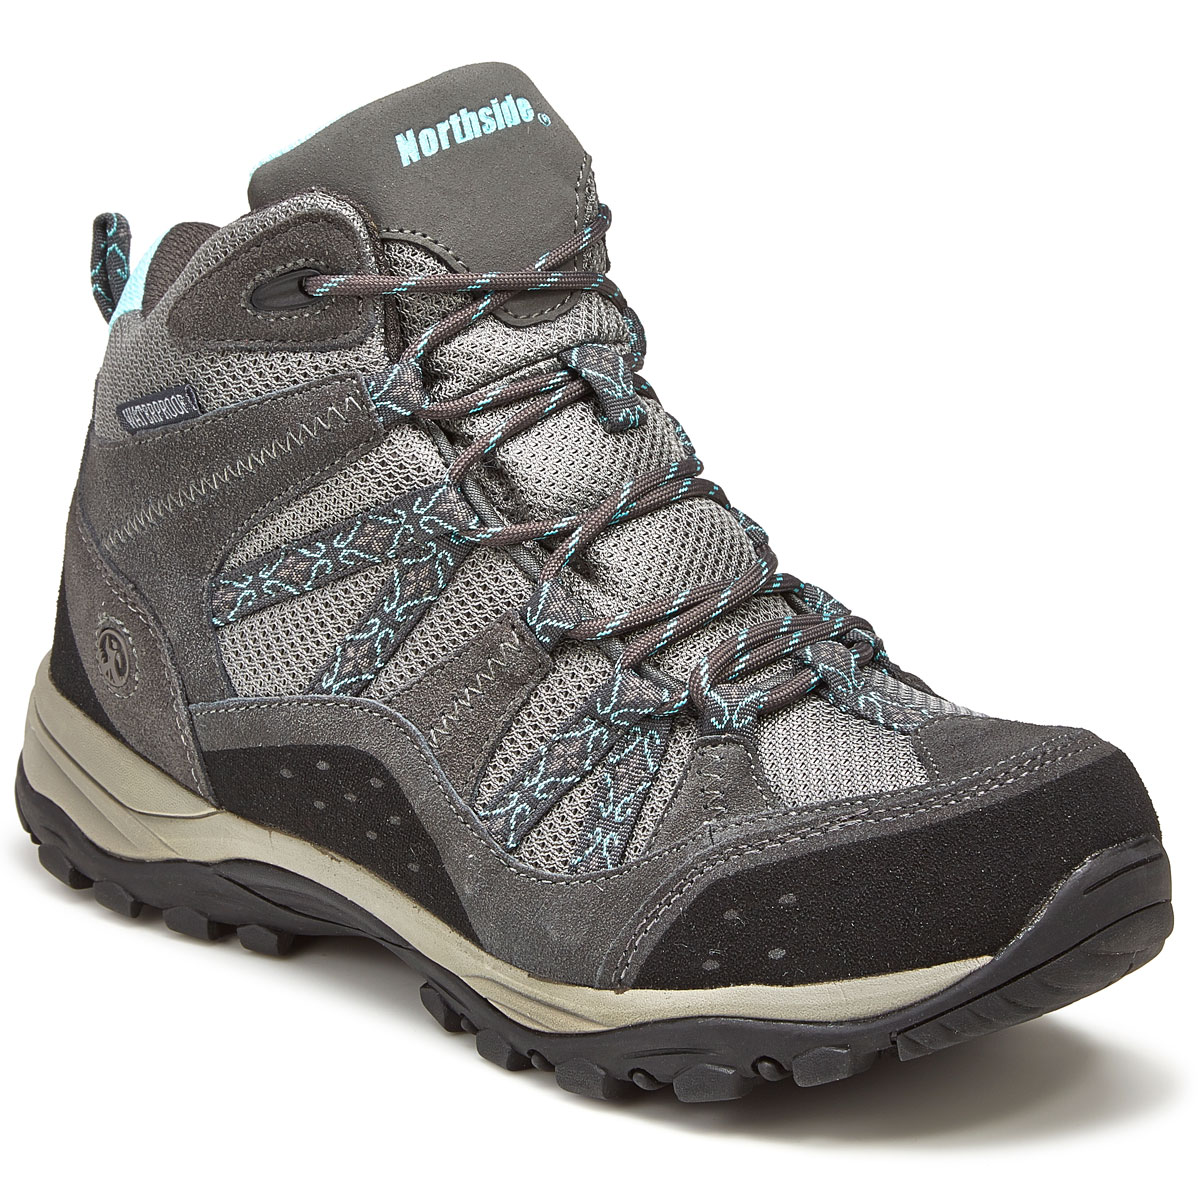 Northside Women's Freemont Mid Waterproof Hiking Boots - Black, 6.5